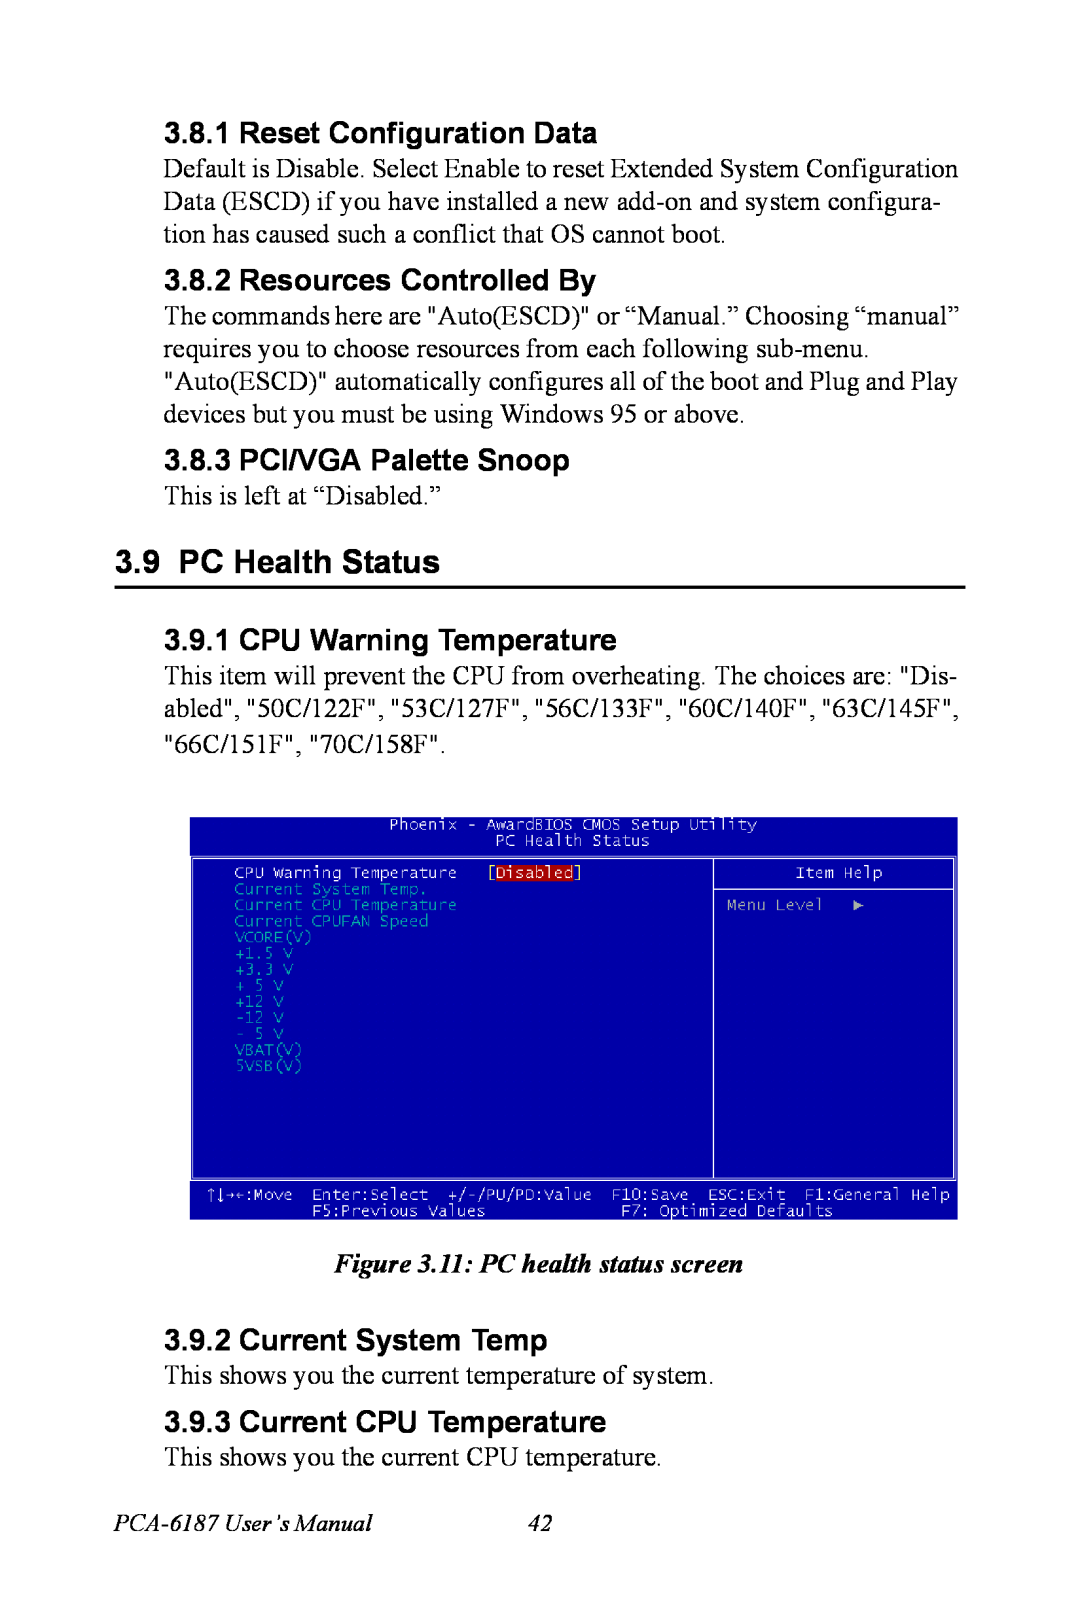 Advantech PCA-6187 PC Health Status, Reset Configuration Data, Resources Controlled By, 3.8.3 PCI/VGA Palette Snoop 